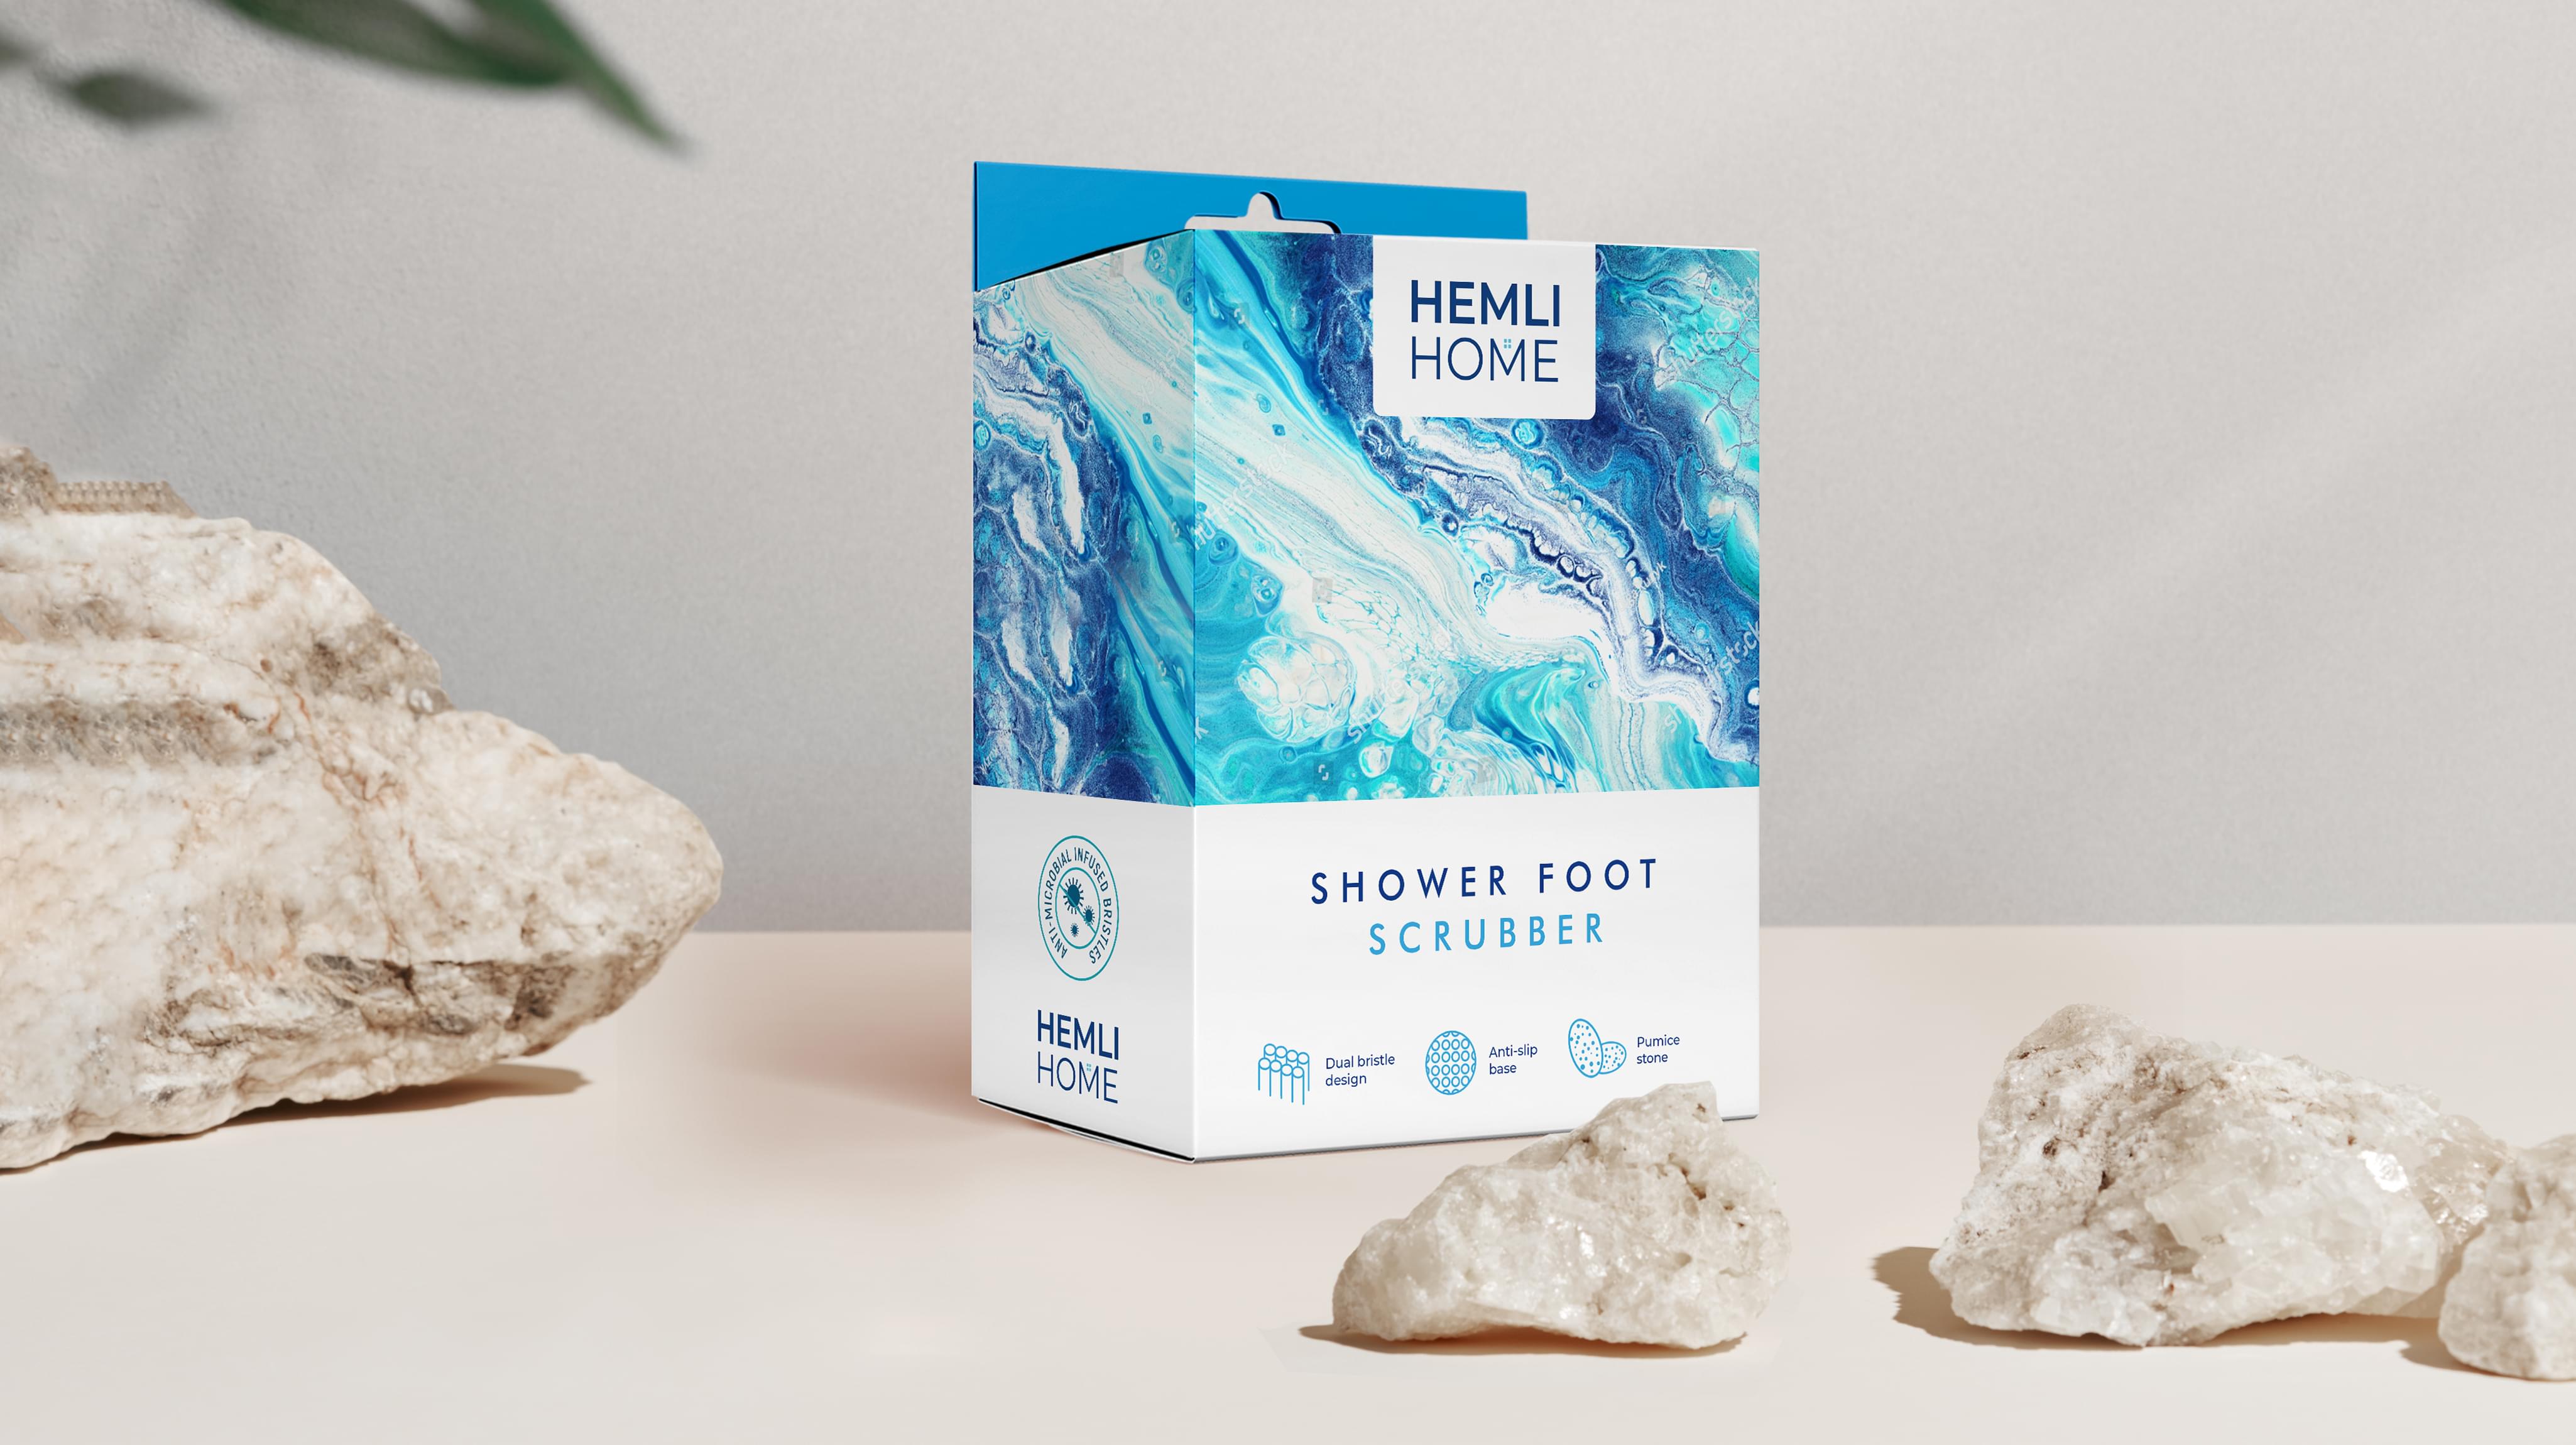 HEMLI HOME Packaging